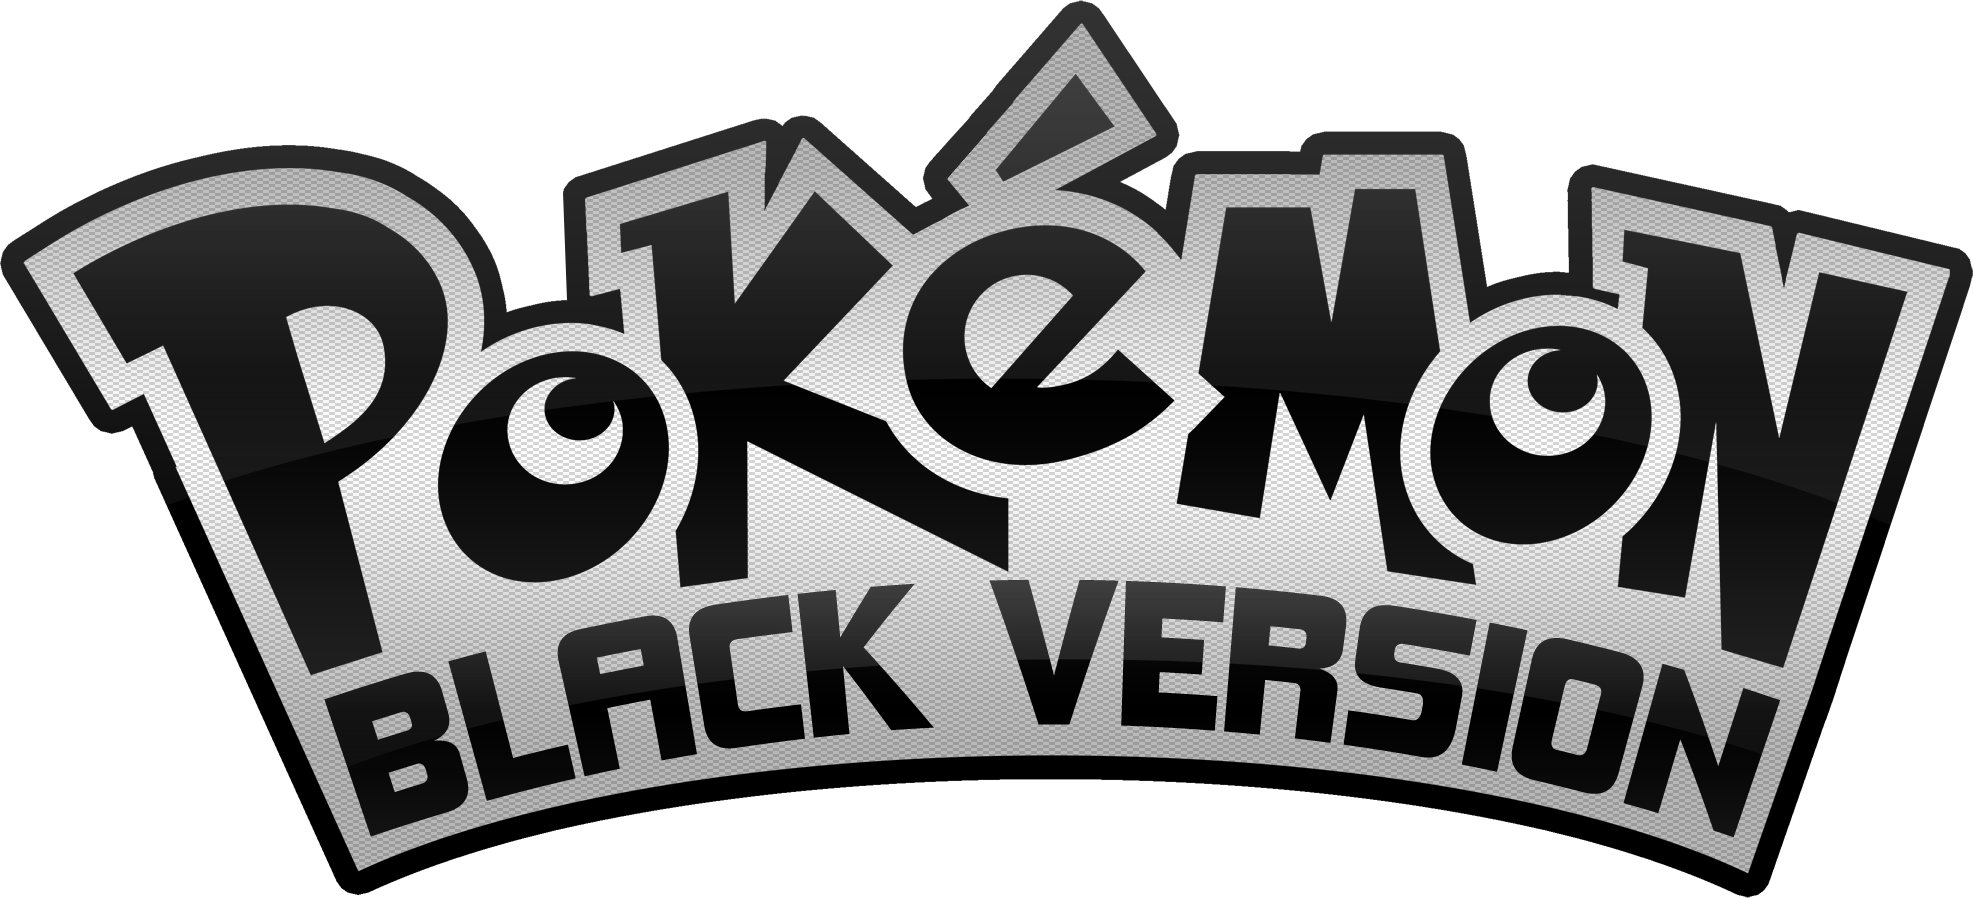 pokemon_black_version_logo_by_nalty.png